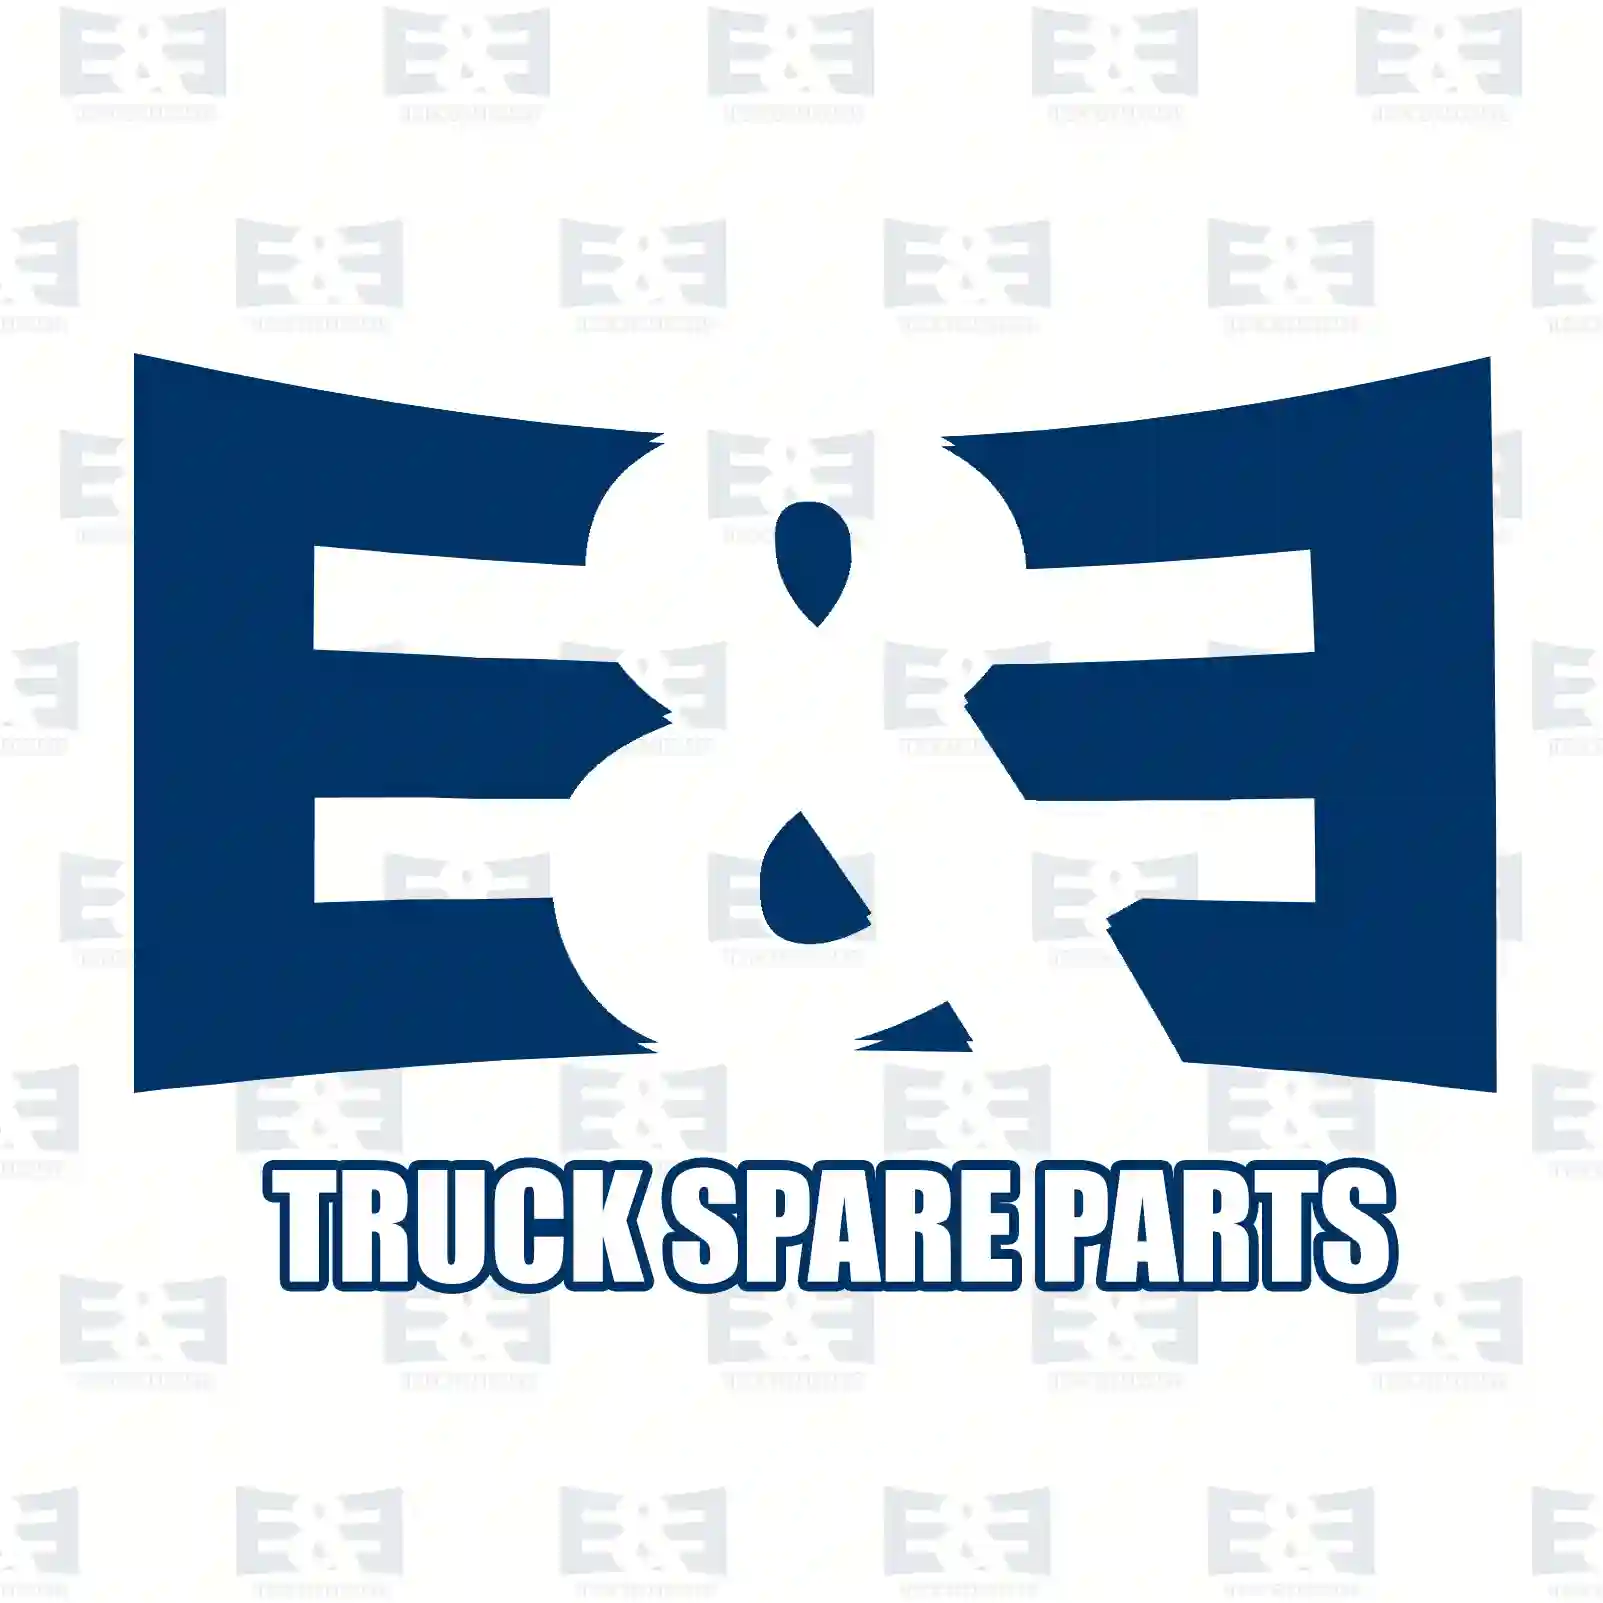 Gearbox Impulse sensor, EE No 2E2279249 ,  oem no:0085425317, 0105428717, 0125425317, 0135426717, 0155422717, ZG20574-0008 E&E Truck Spare Parts | Truck Spare Parts, Auotomotive Spare Parts